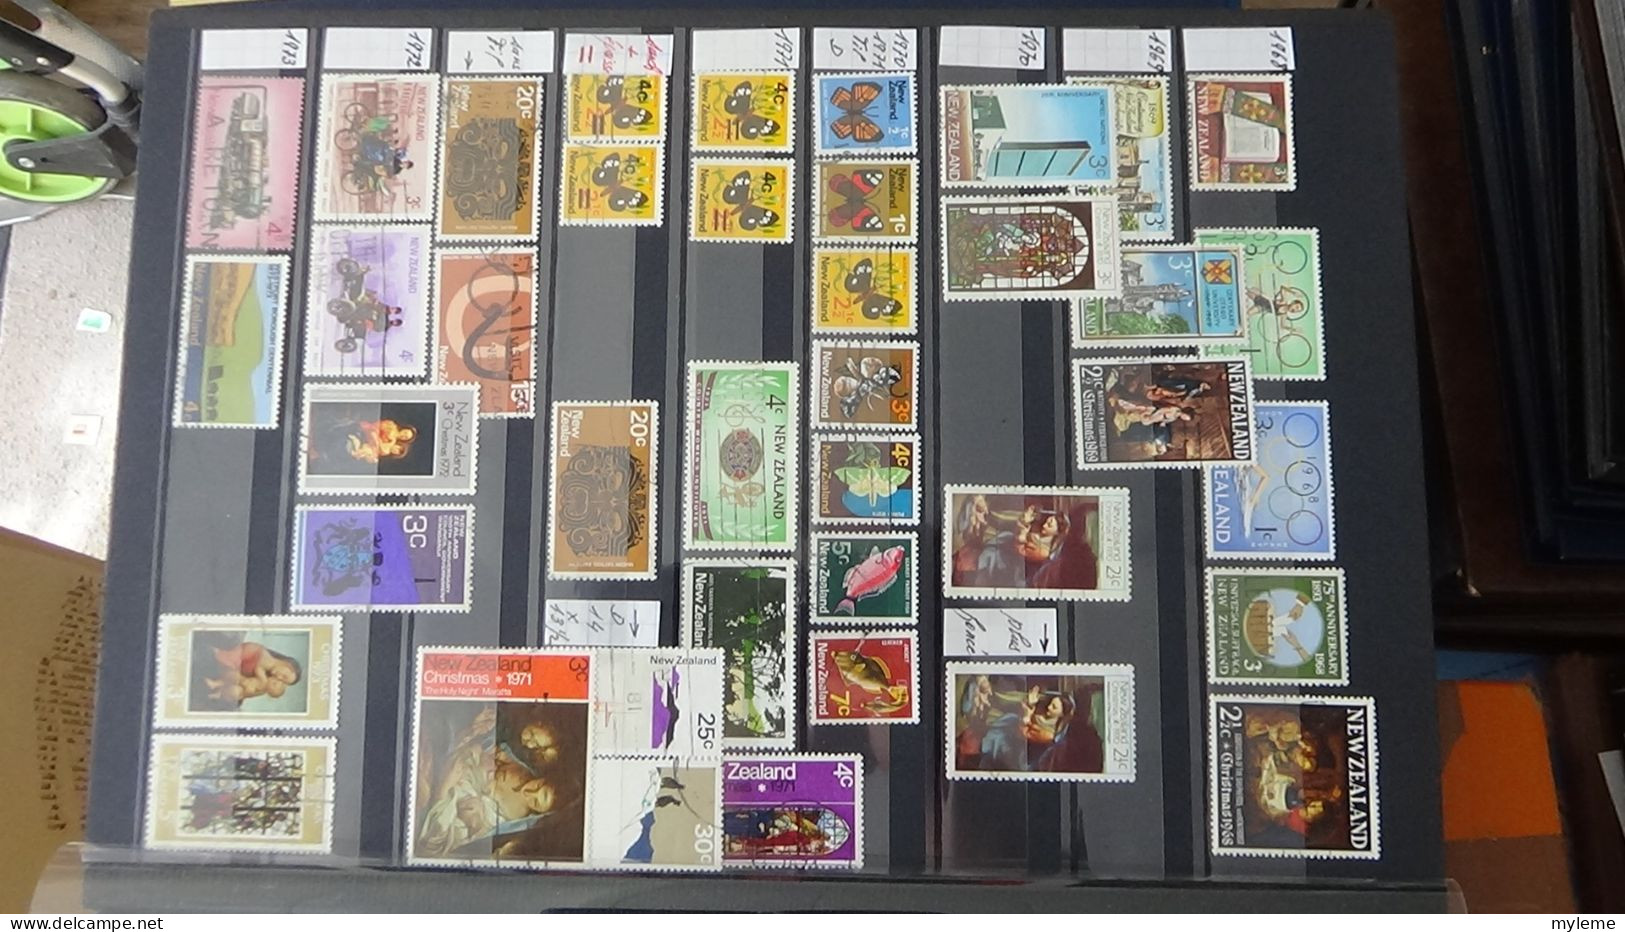 BF29 Ensemble de timbres de divers pays + Merson N° 119 + 121 + 123 **. Cote 540 euros